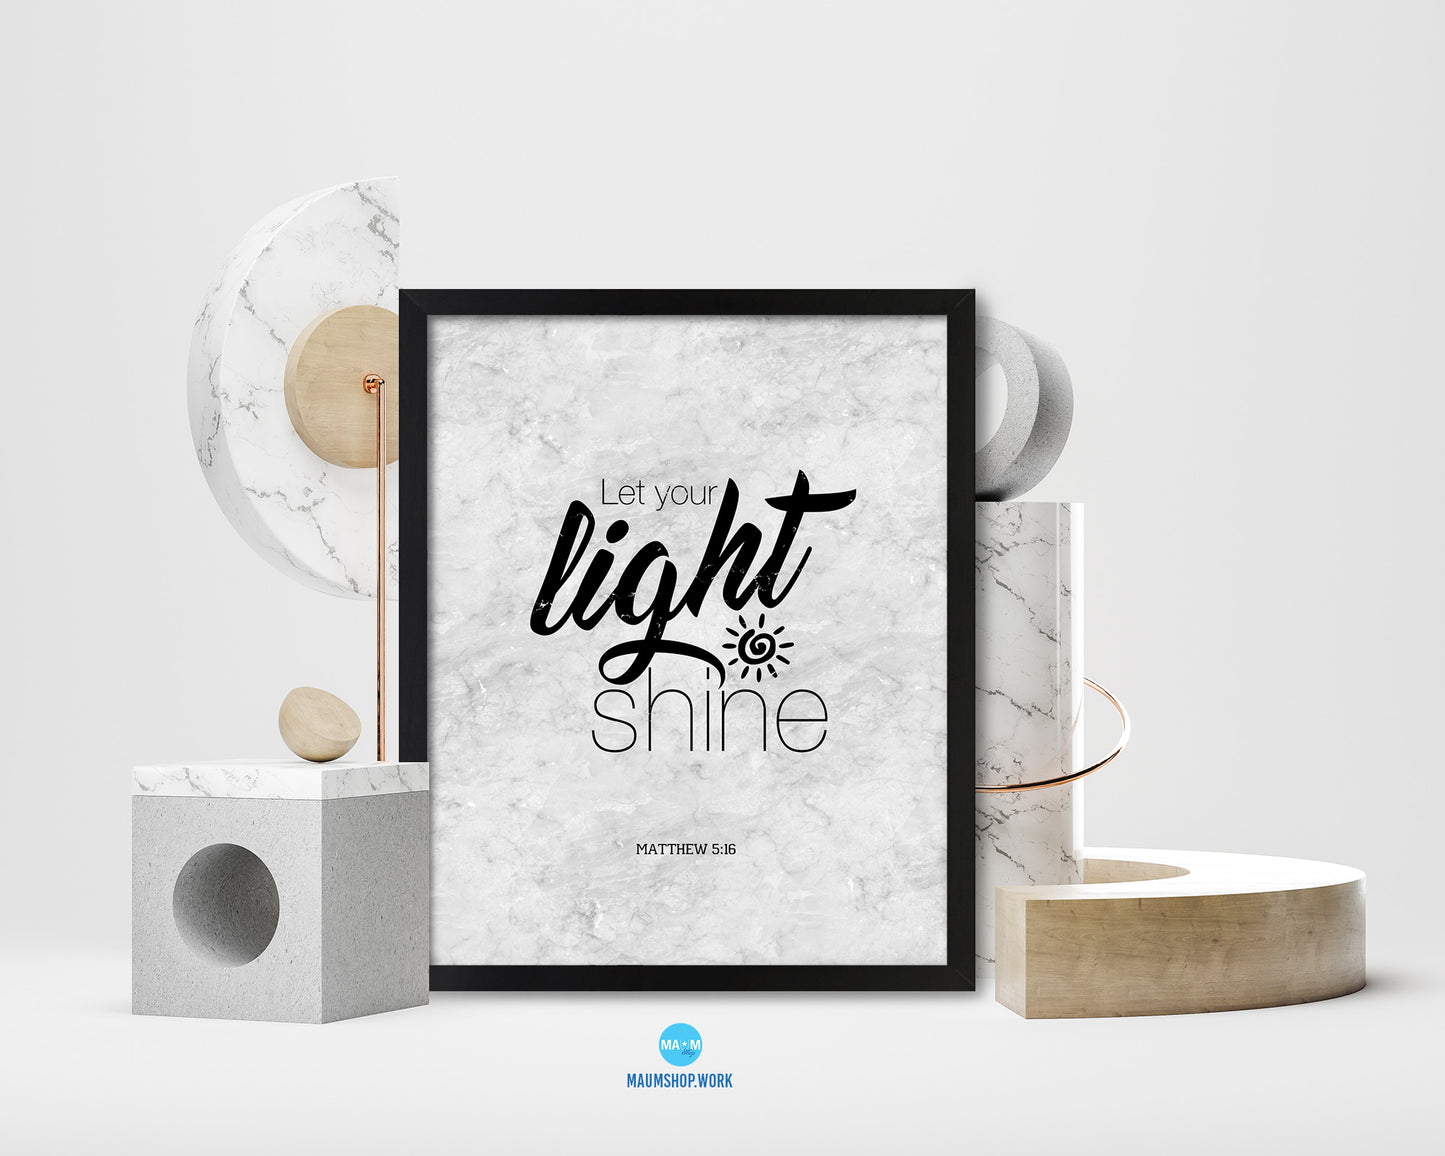 Let your light shine, Matthew 5:16 Bible Scripture Verse Framed Print Wall Art Decor Gifts